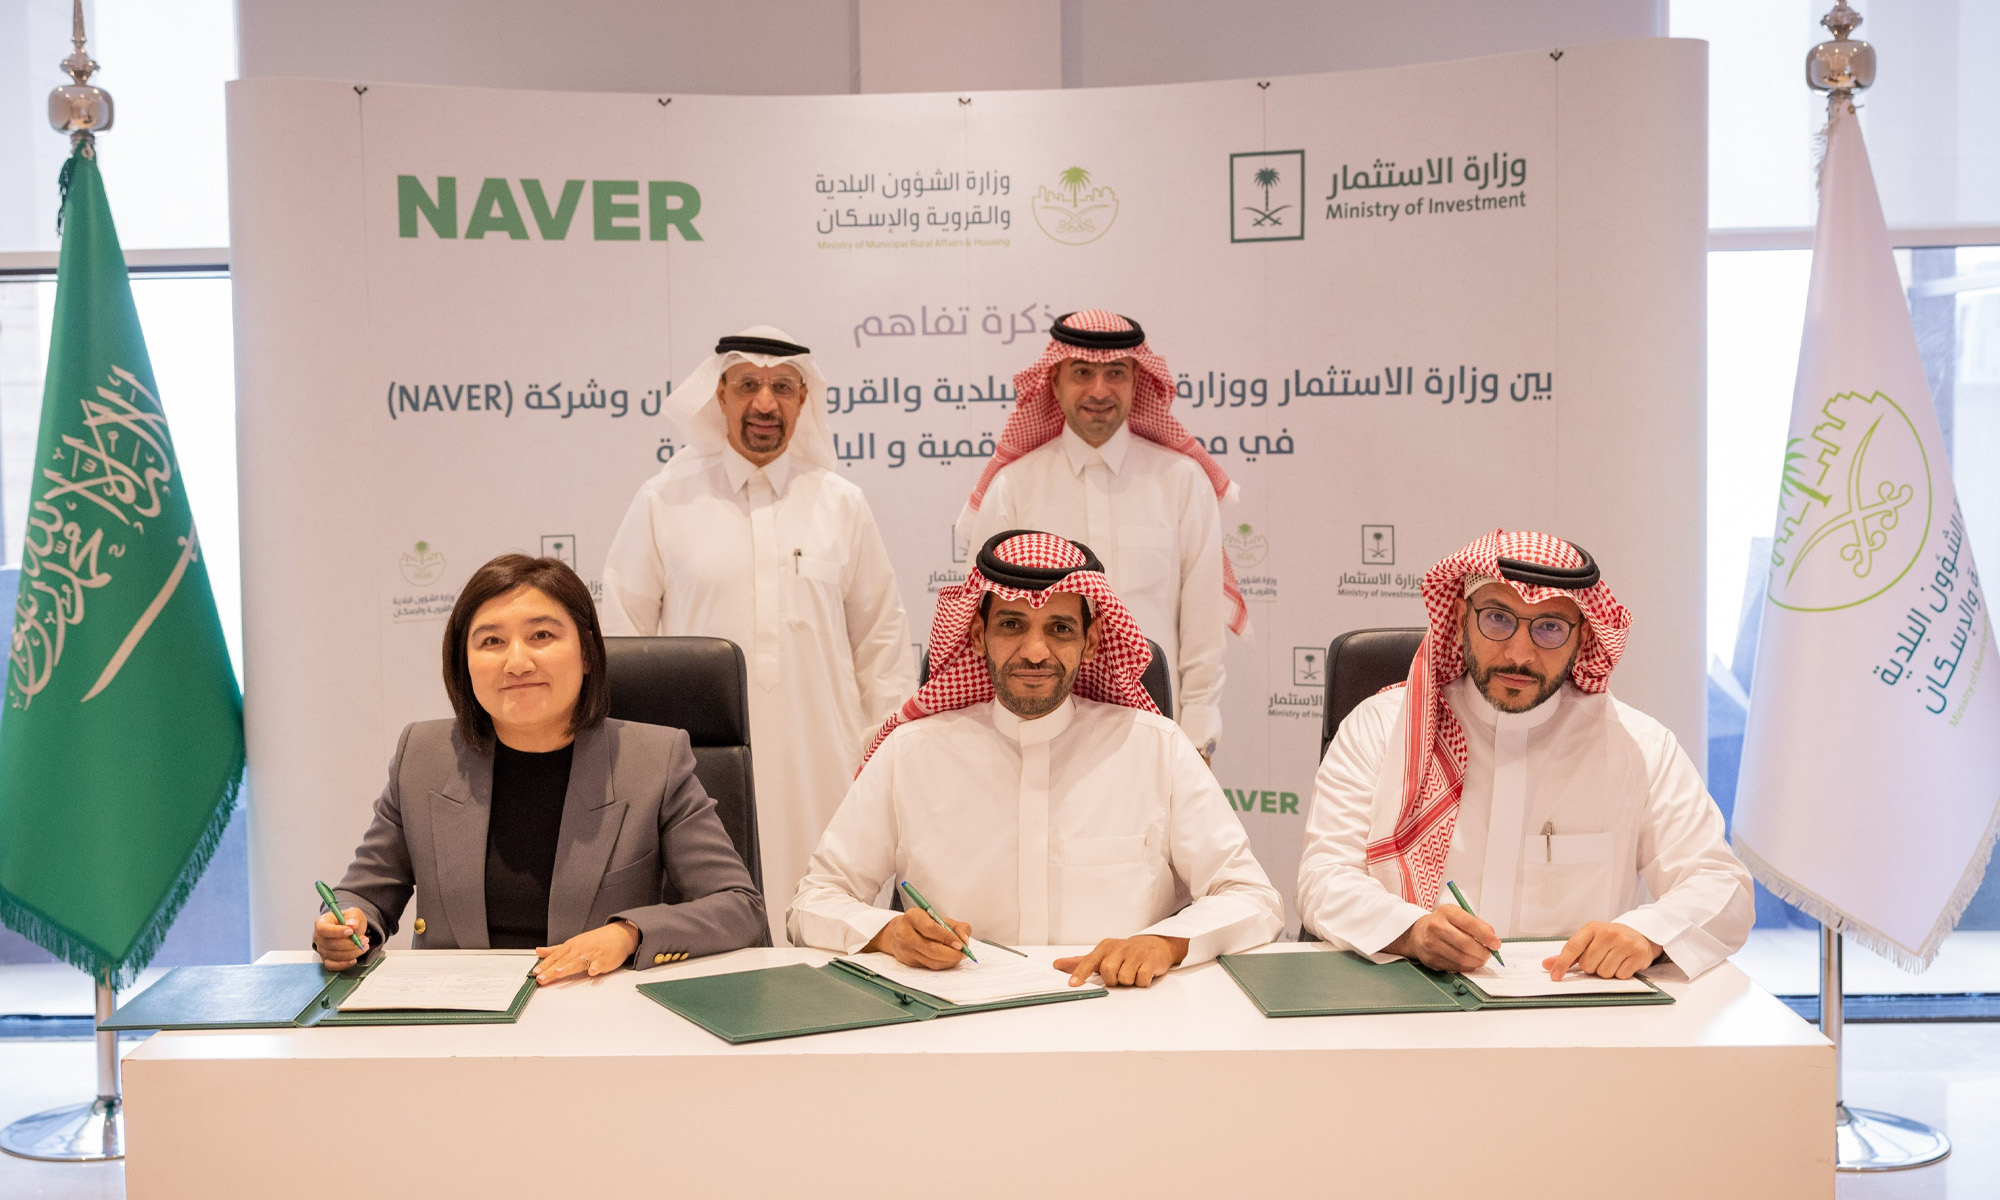 naver saudi arabia digital twin cities agreement